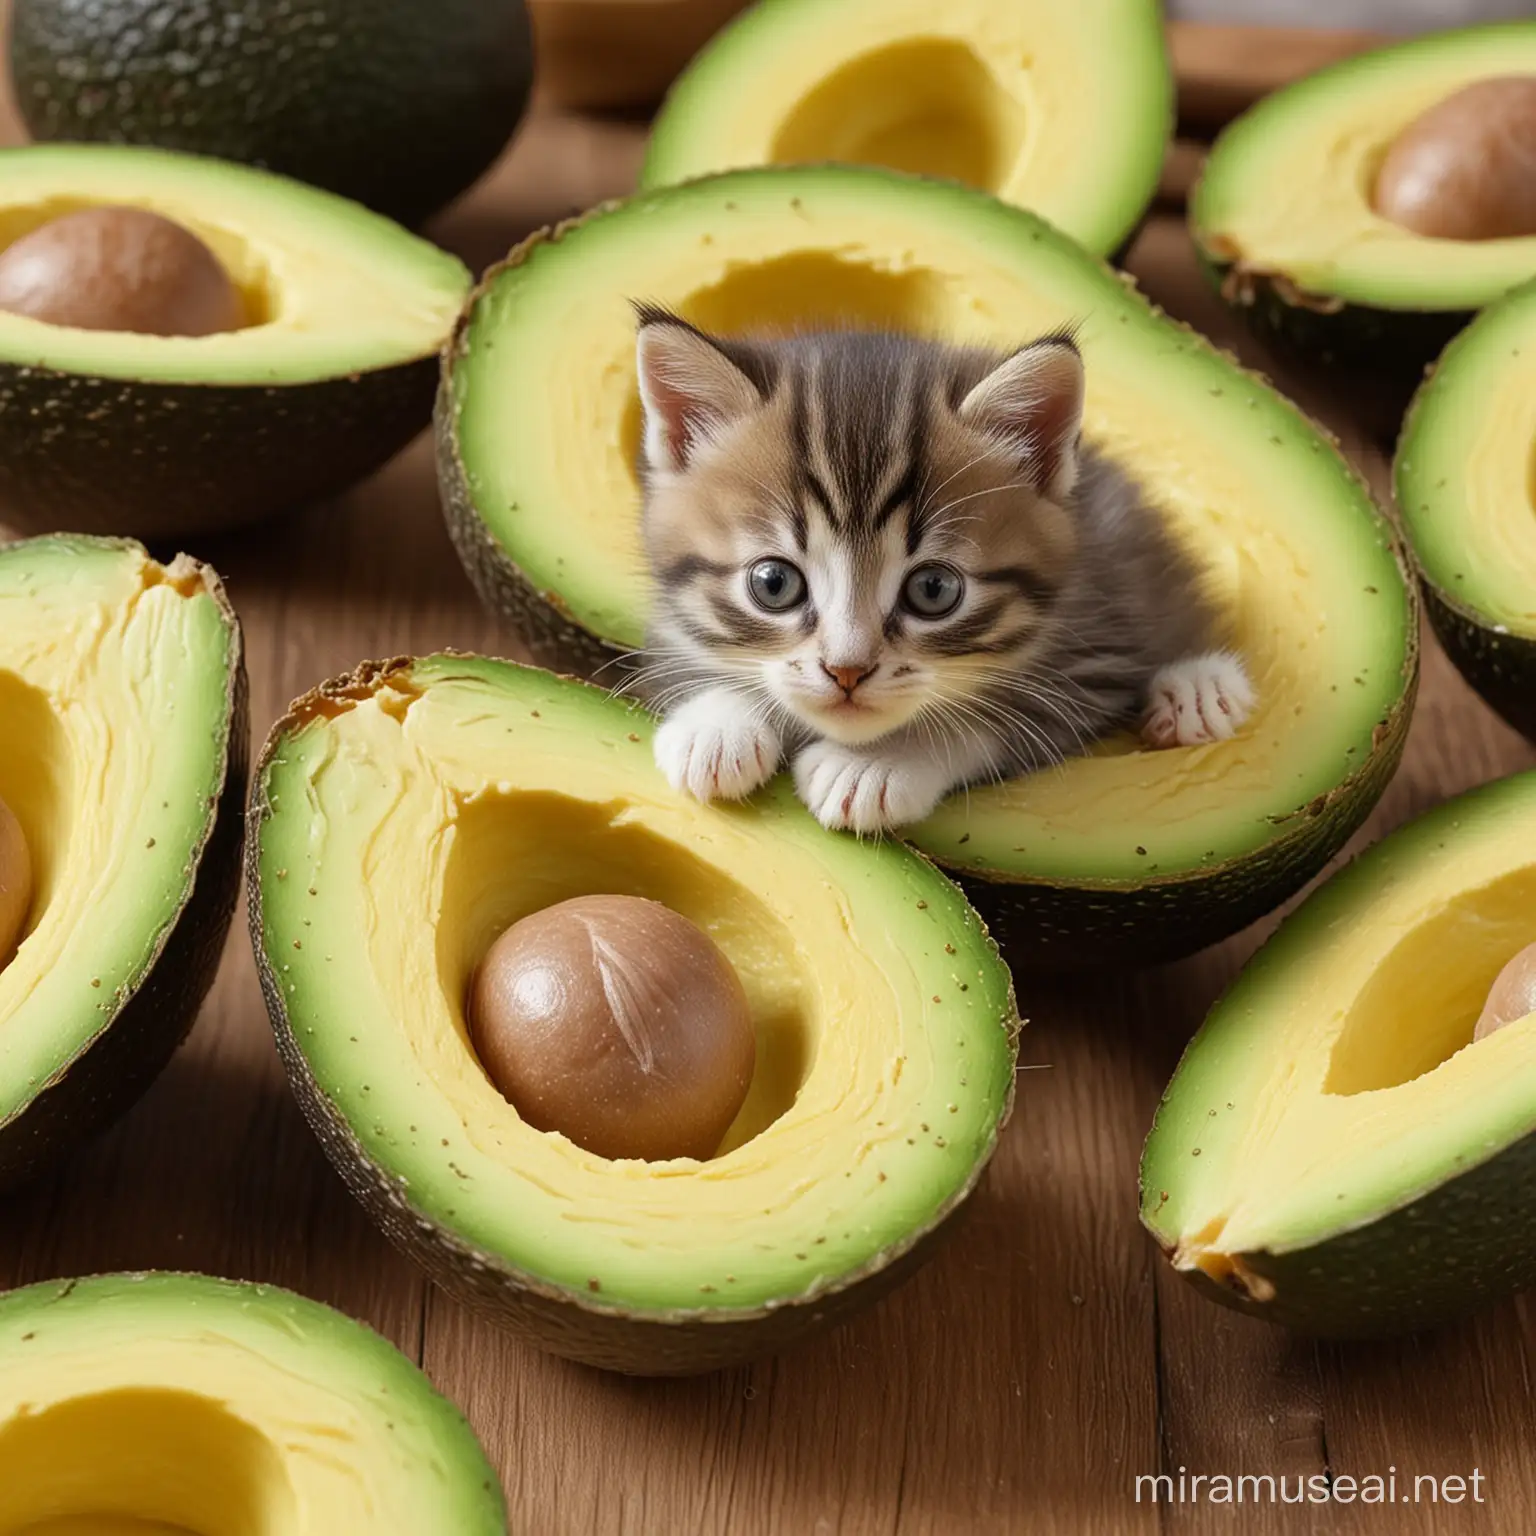 Kittens Playing Among Avocados